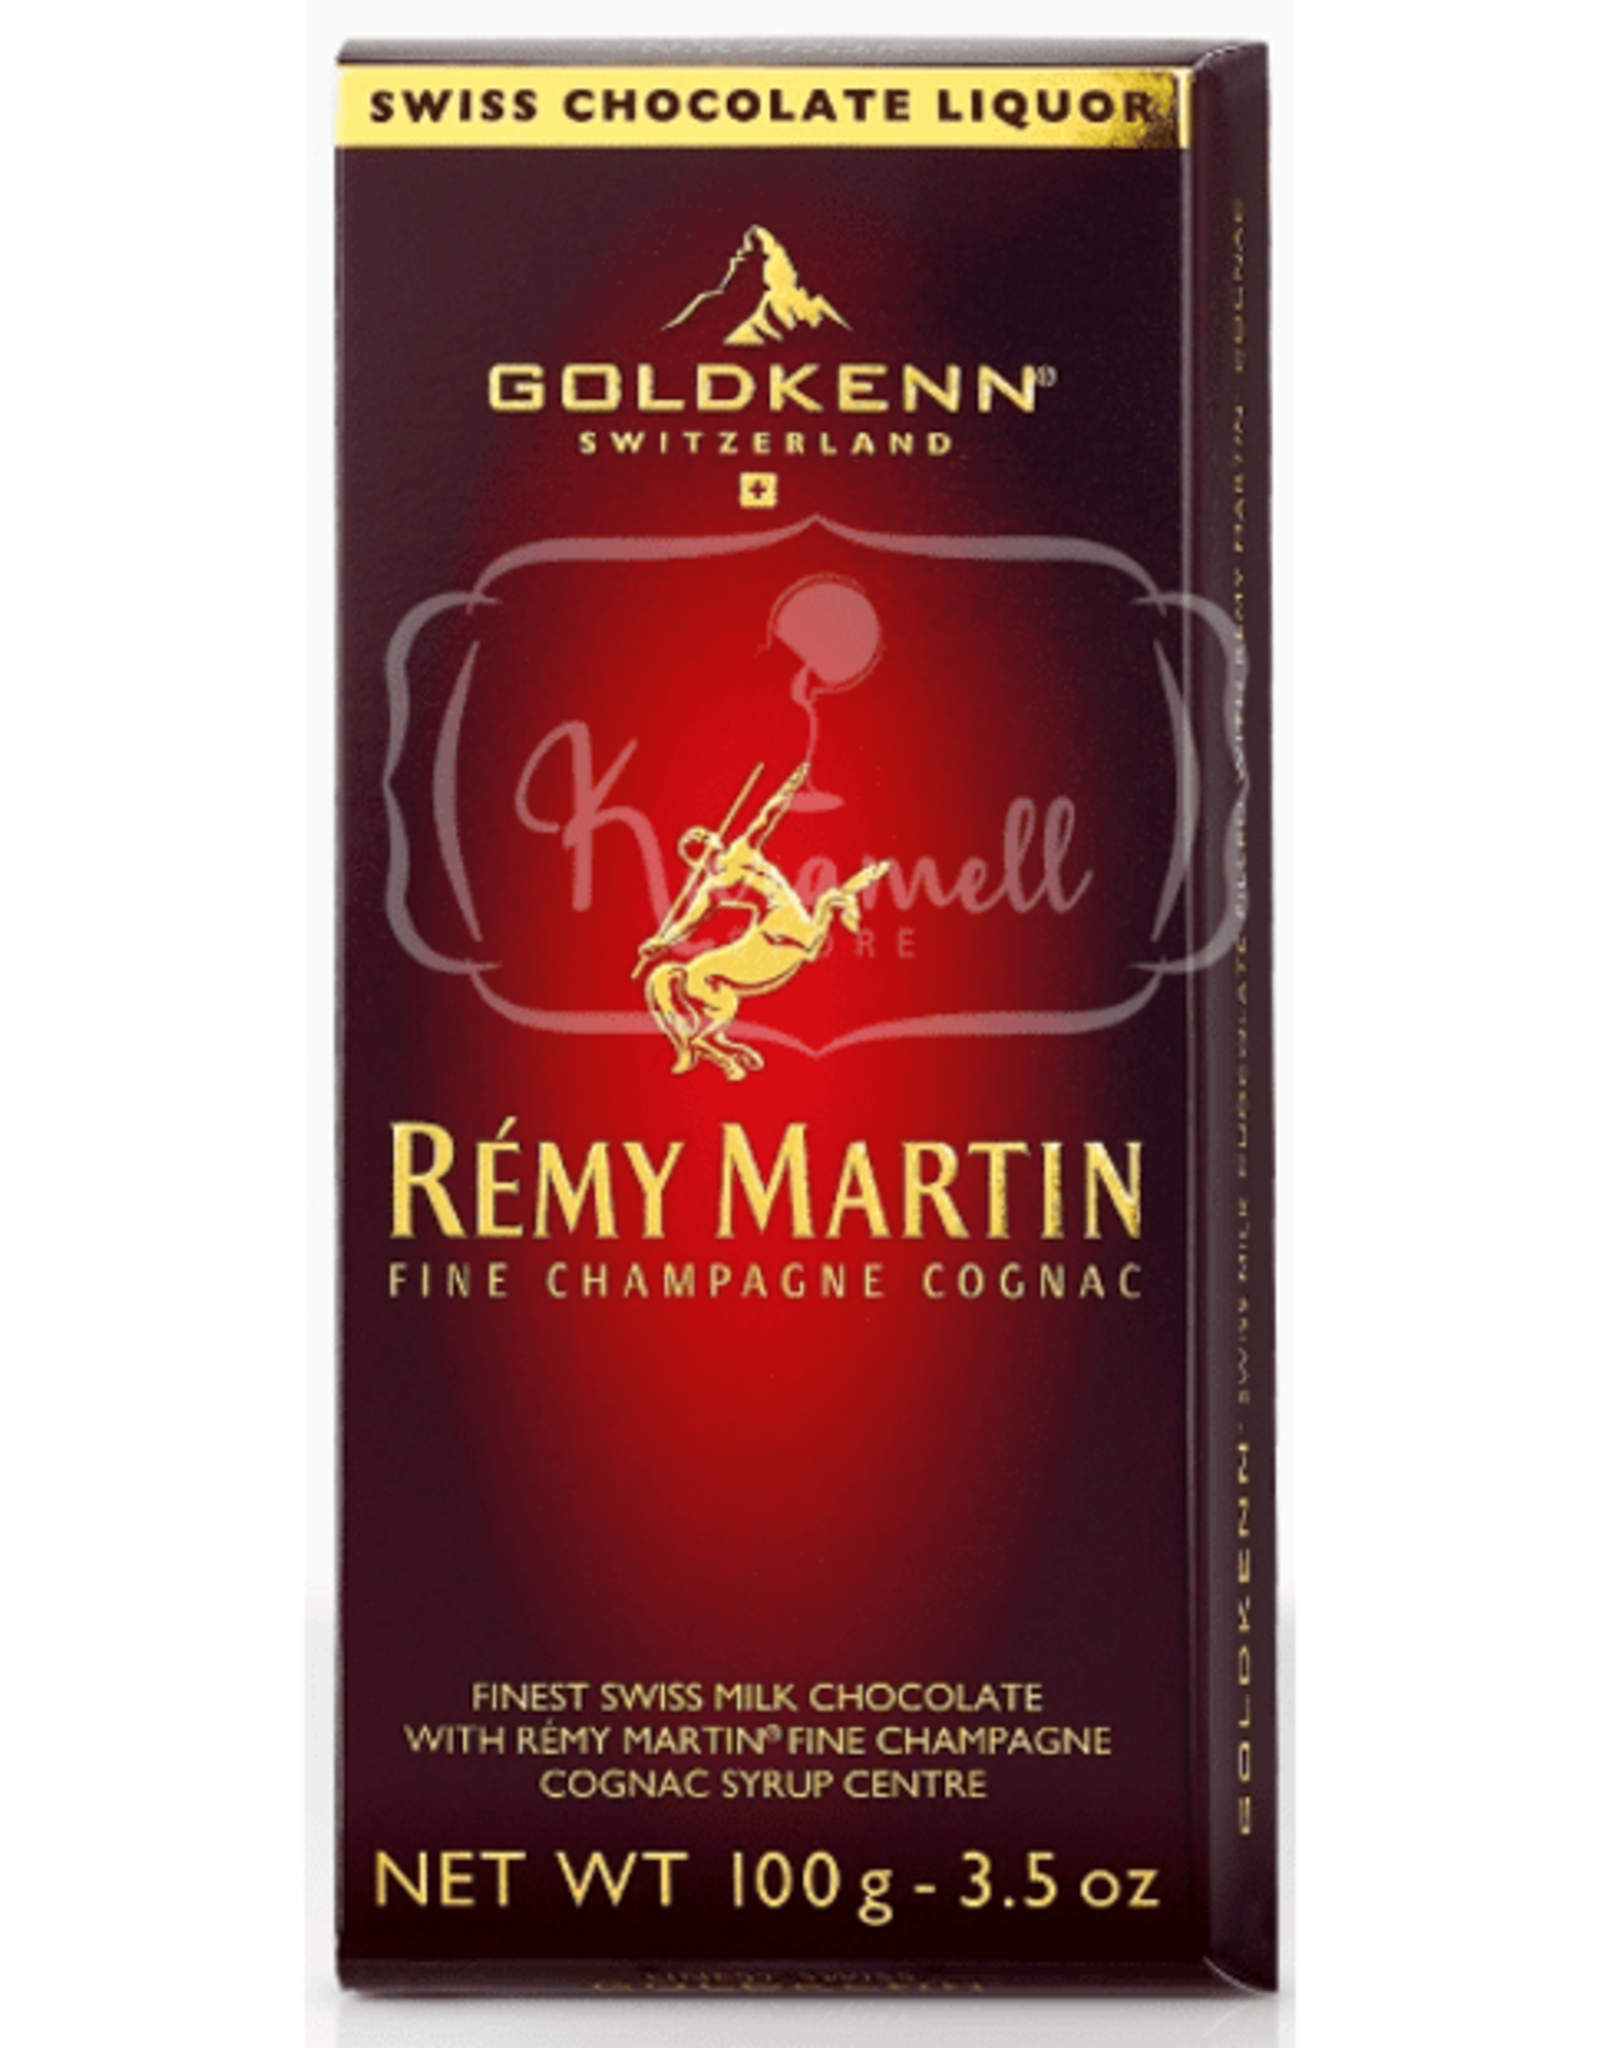 Jack Daniel's Remy Martin Chocolate Liquor